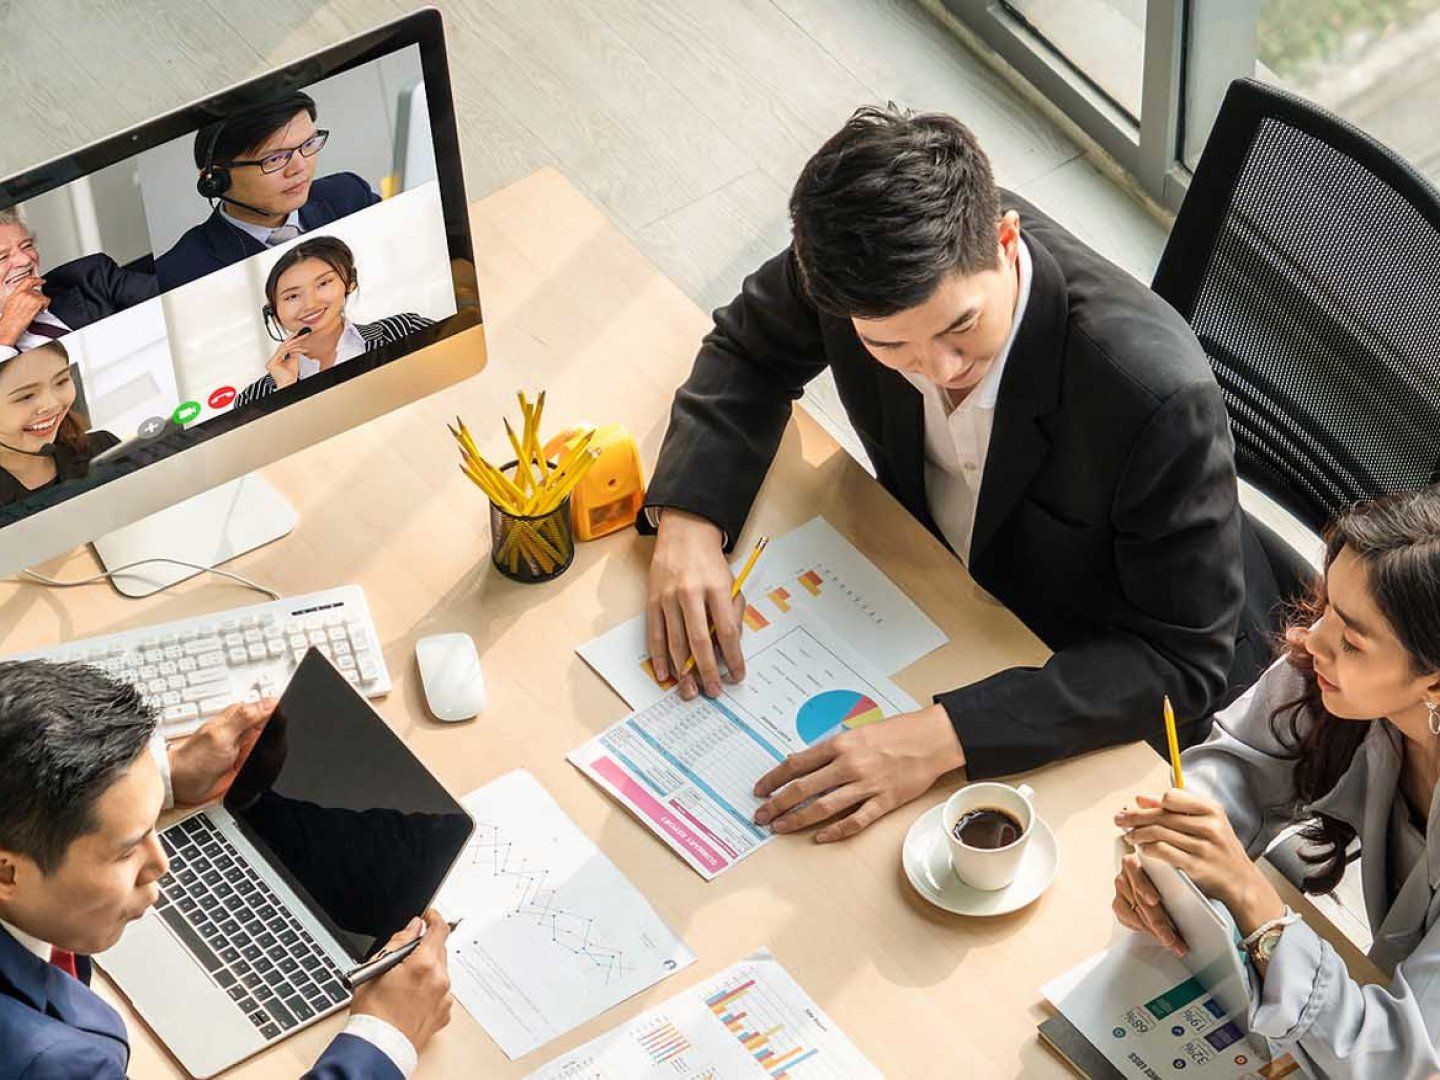 Virtual Meeting with company members